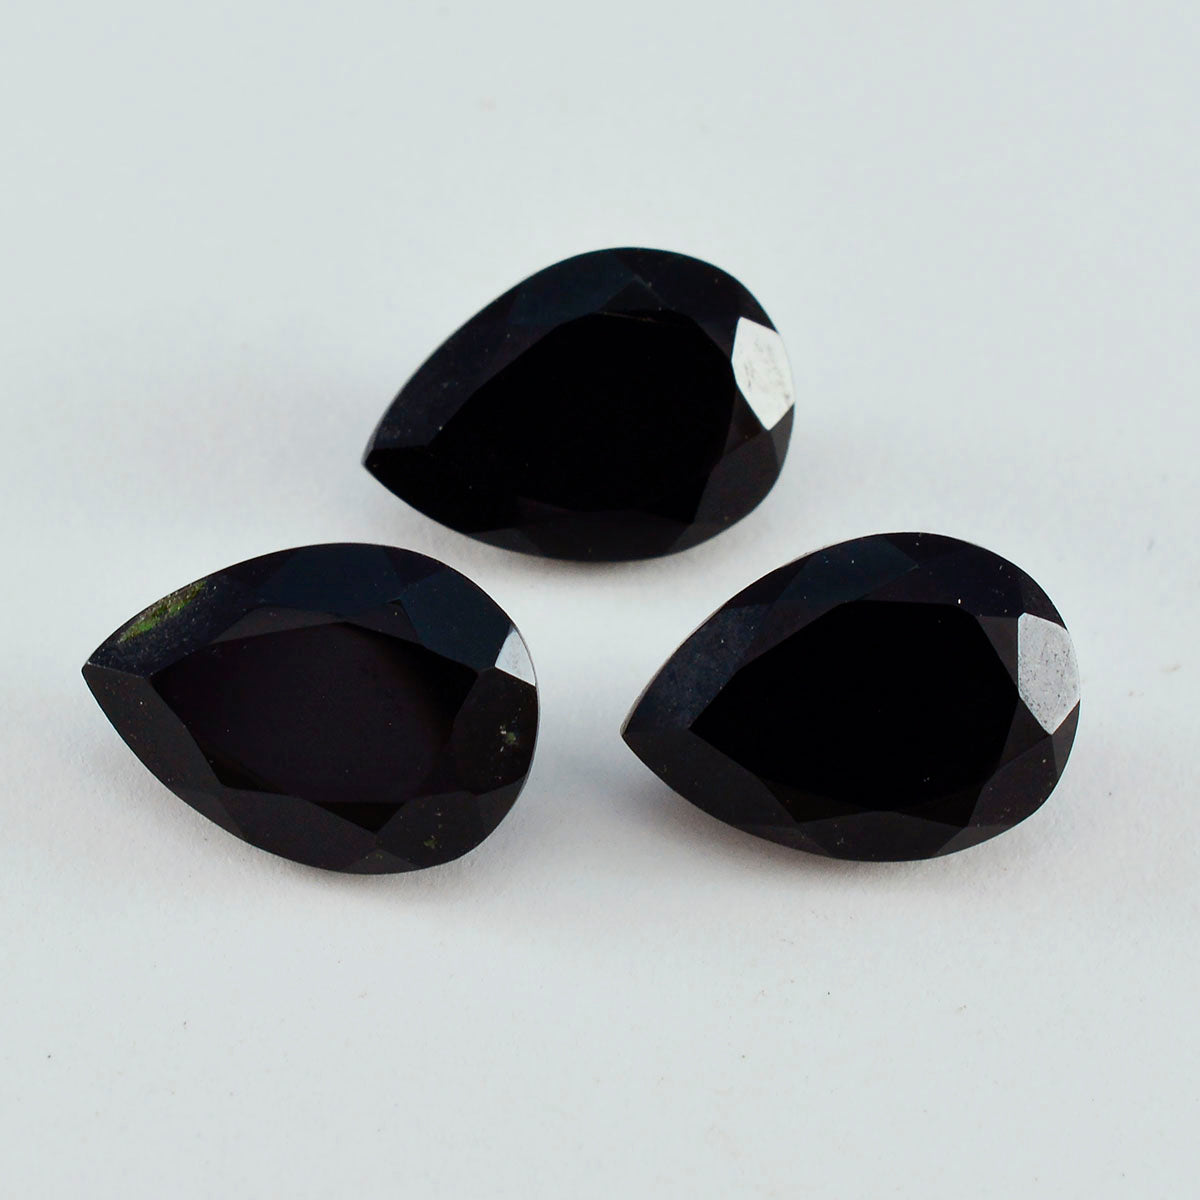 Riyogems 1PC Natural Black Onyx Faceted 12x16 mm Pear Shape A1 Quality Loose Gem